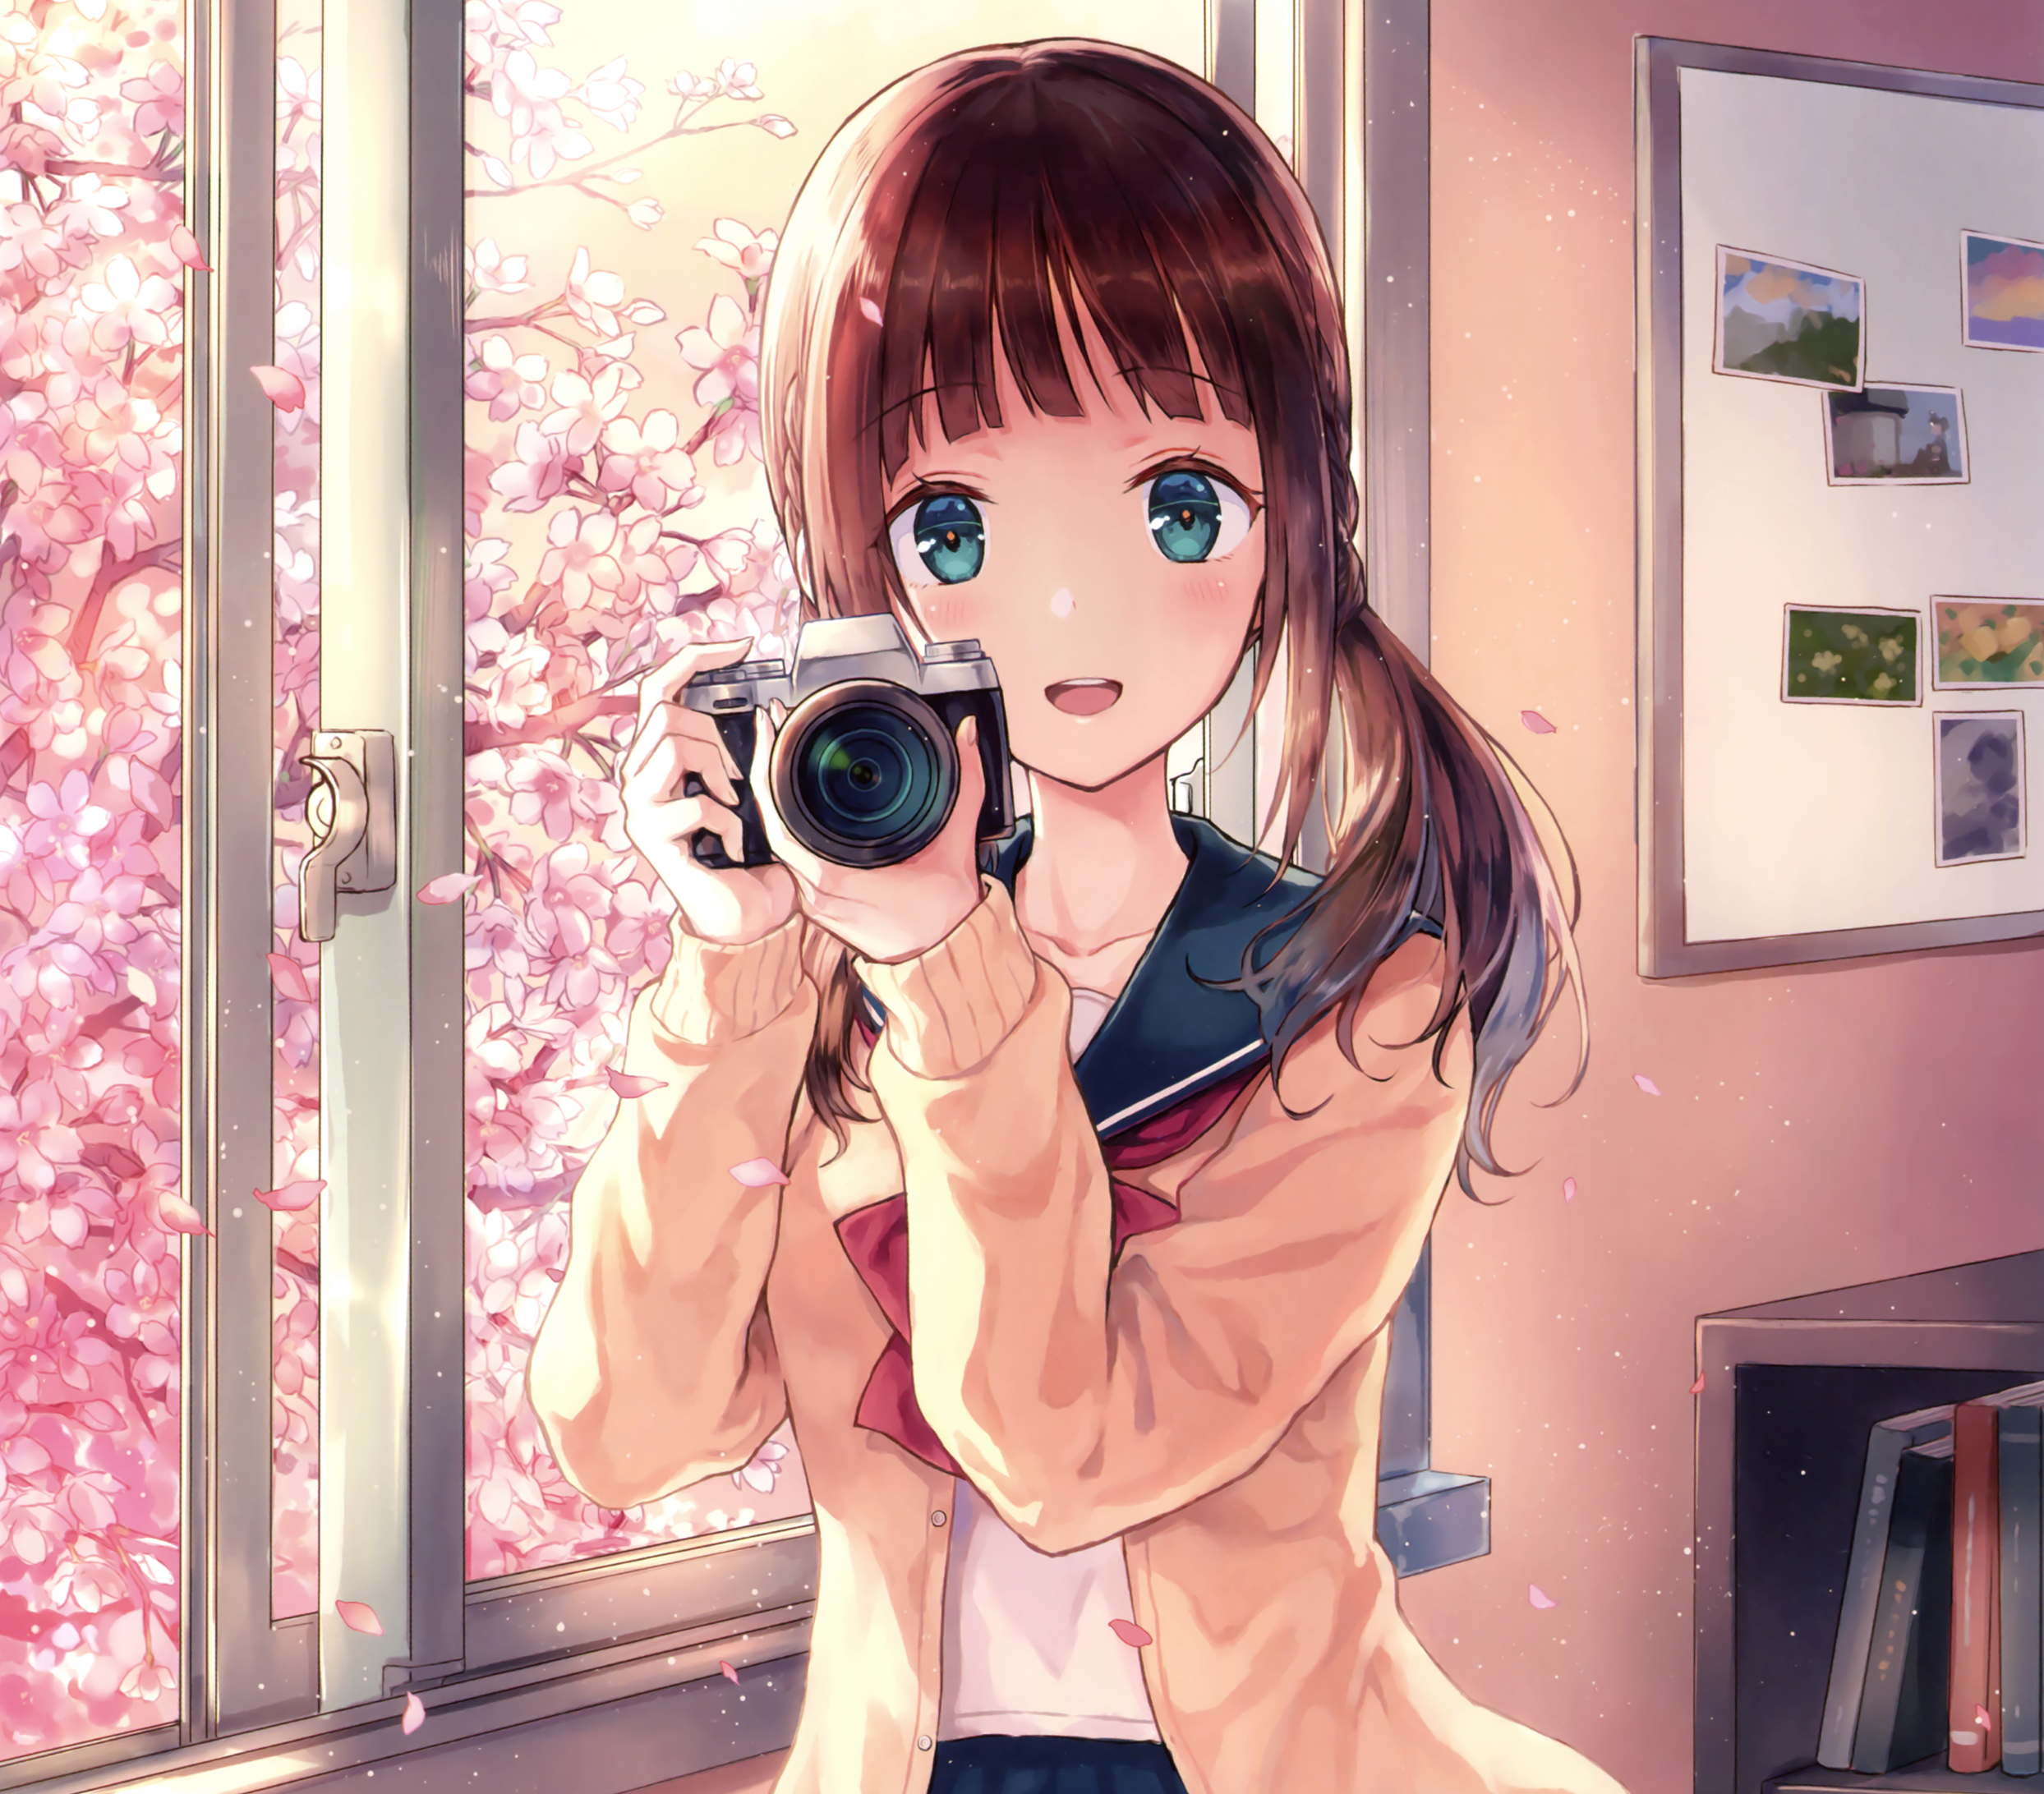 Wallpaper, anime girls, original characters, brunette, twintails, camera, green eyes, cherry blossom, school uniform, smiling, artwork 2488x2184